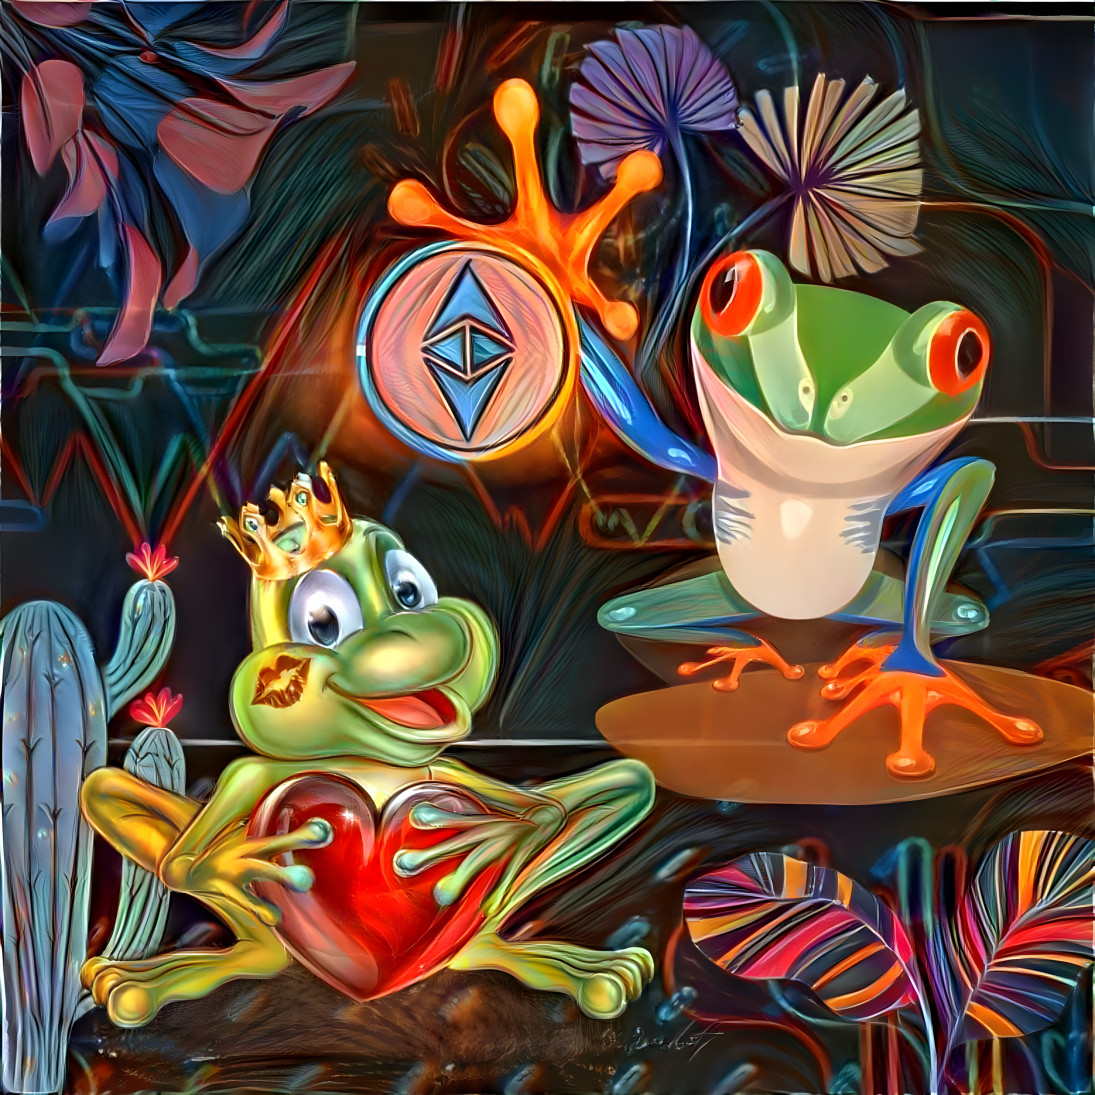 Frog